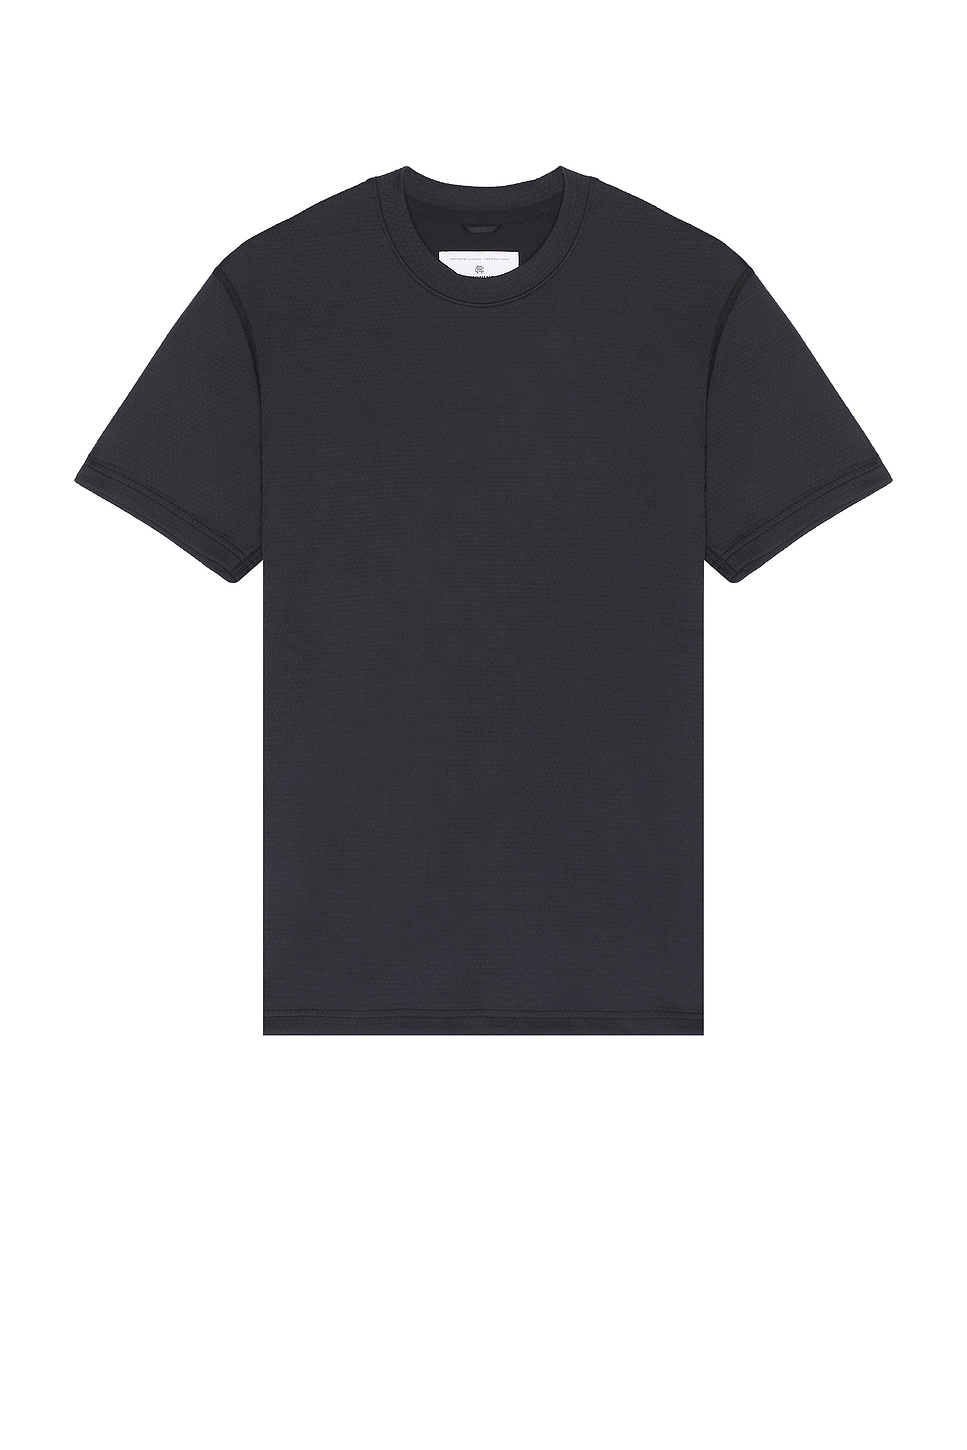 Solotex Mesh T-shirt in Black